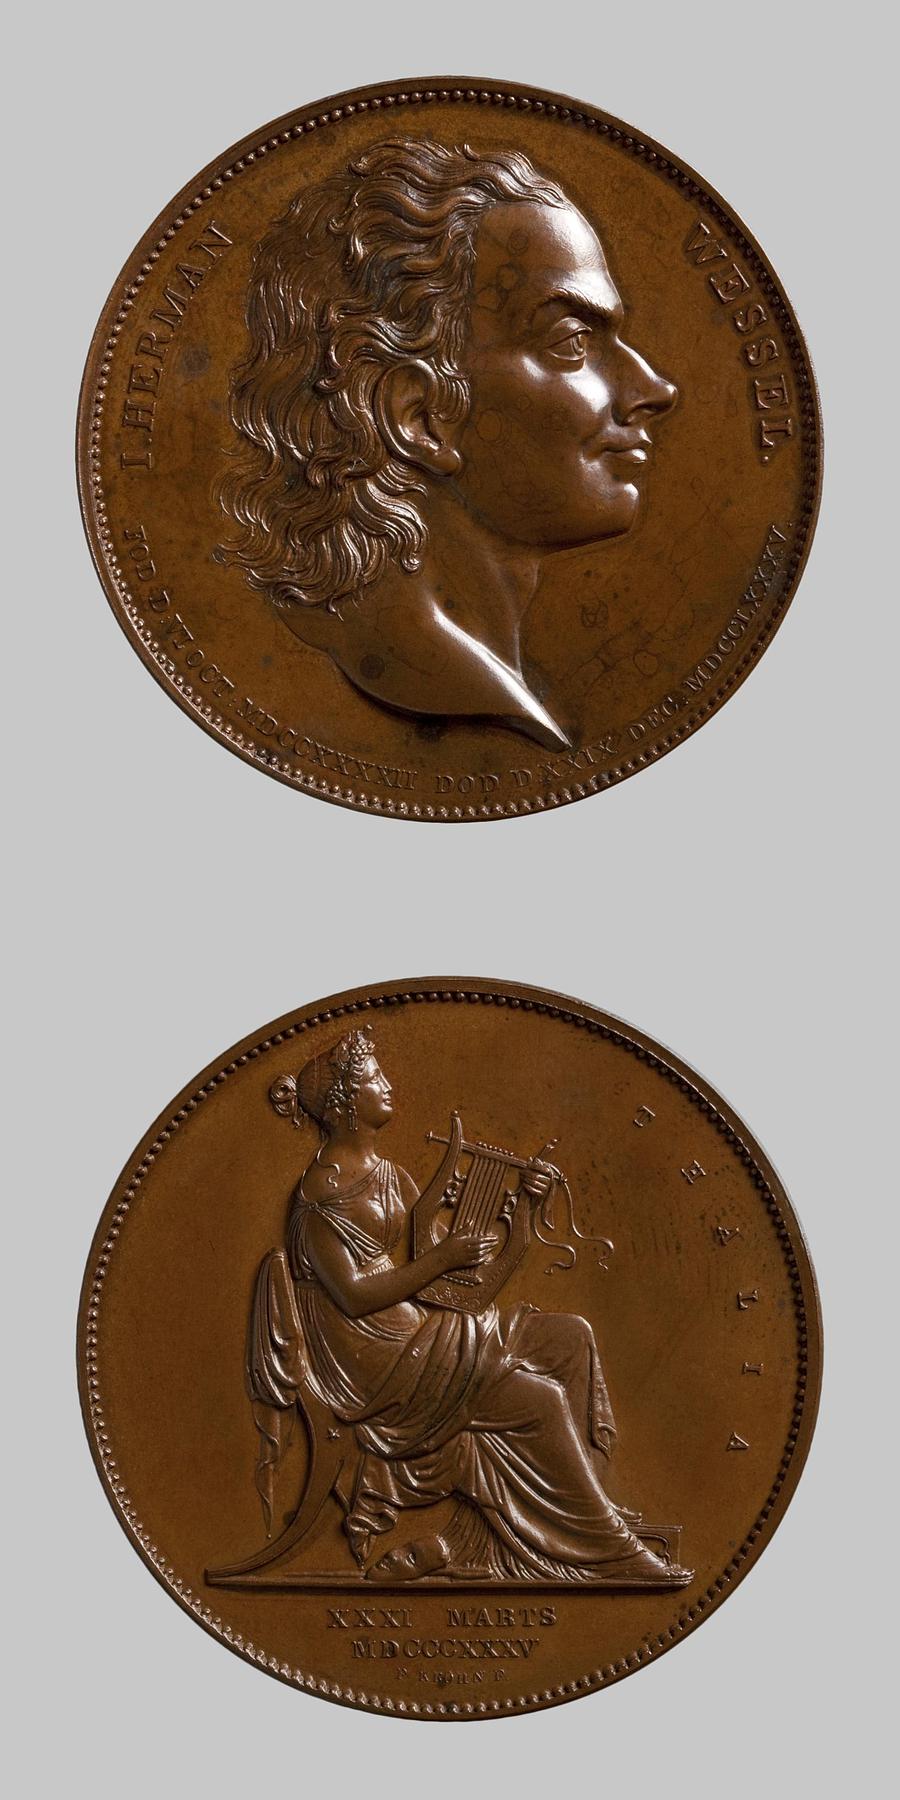 Medaljens forside: Johann Herman Wessel. Medaljens bagside: Komediens muse, F97